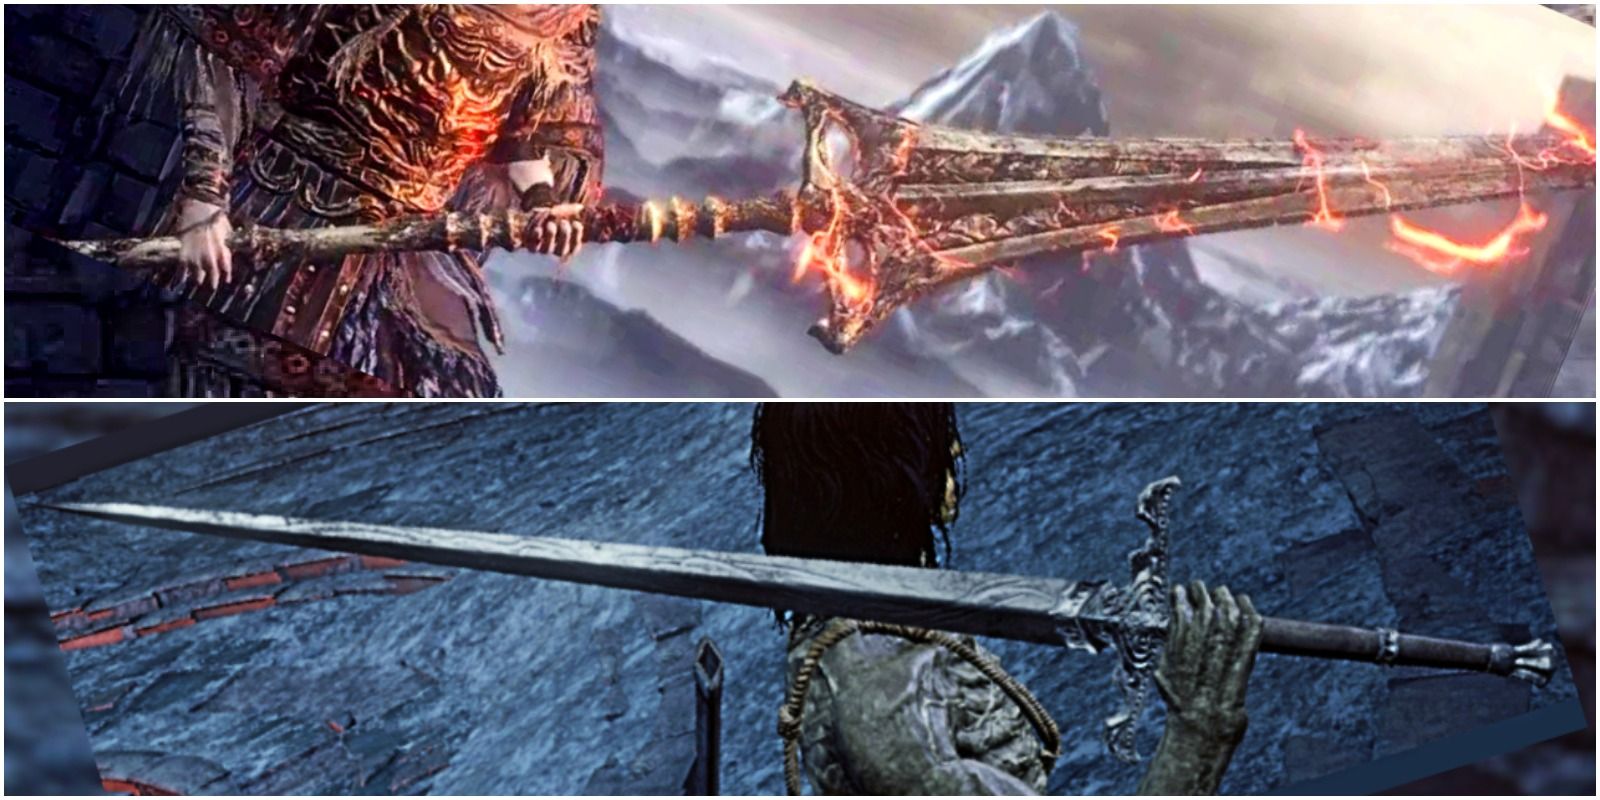 dragonslayer swordspear and the drakeblood greatsword.